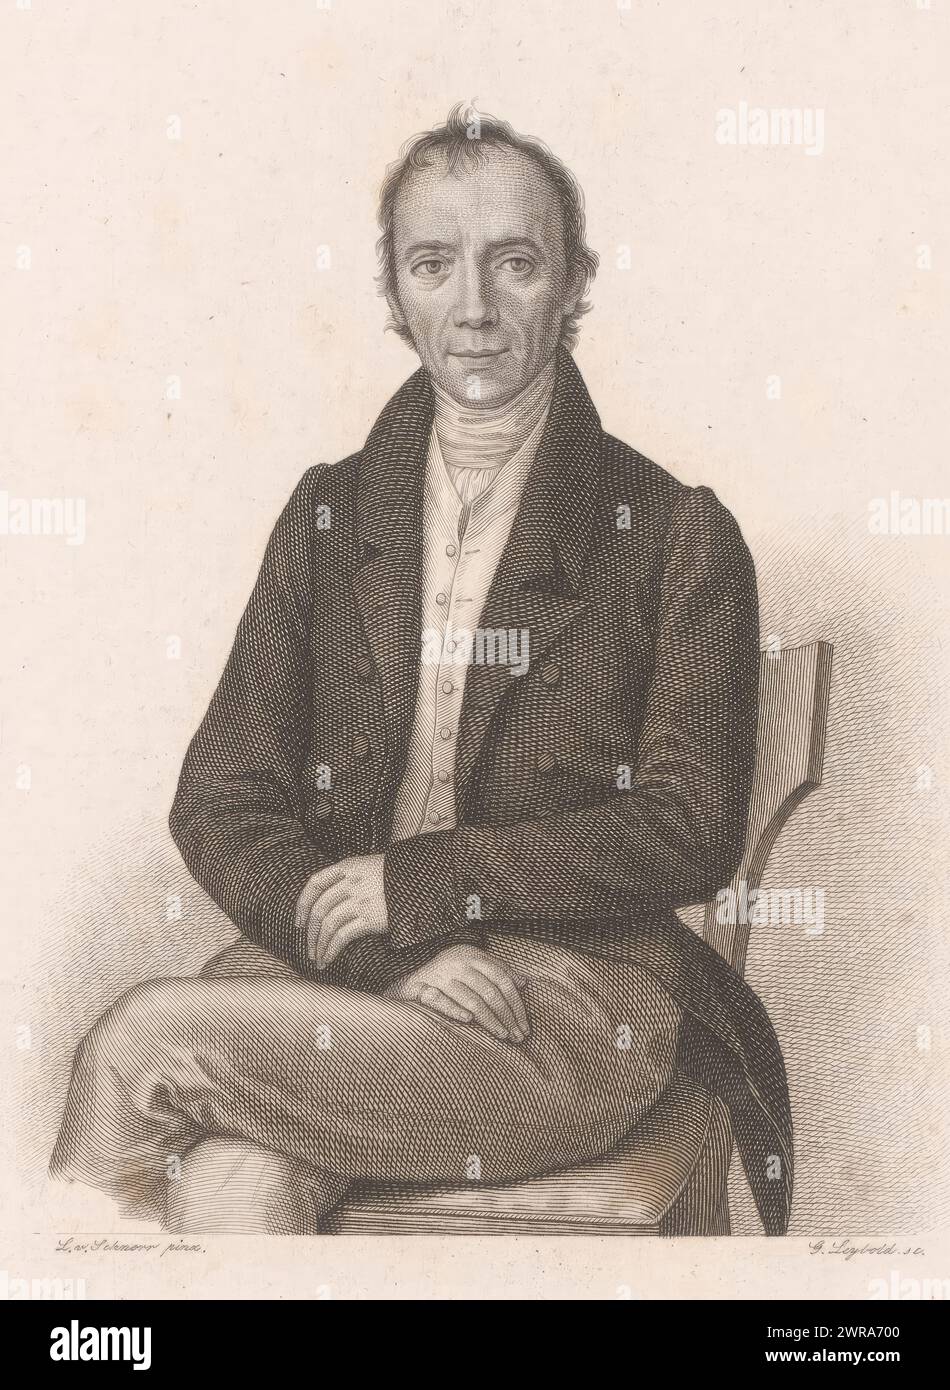 Portrait of Philipp Karl Hartmann, print maker: Heinrich Gustav Adolf Leybold, after painting by: L.v. Schnorr, 1804 - 1842, paper, engraving, height 201 mm × width 136 mm, print Stock Photo